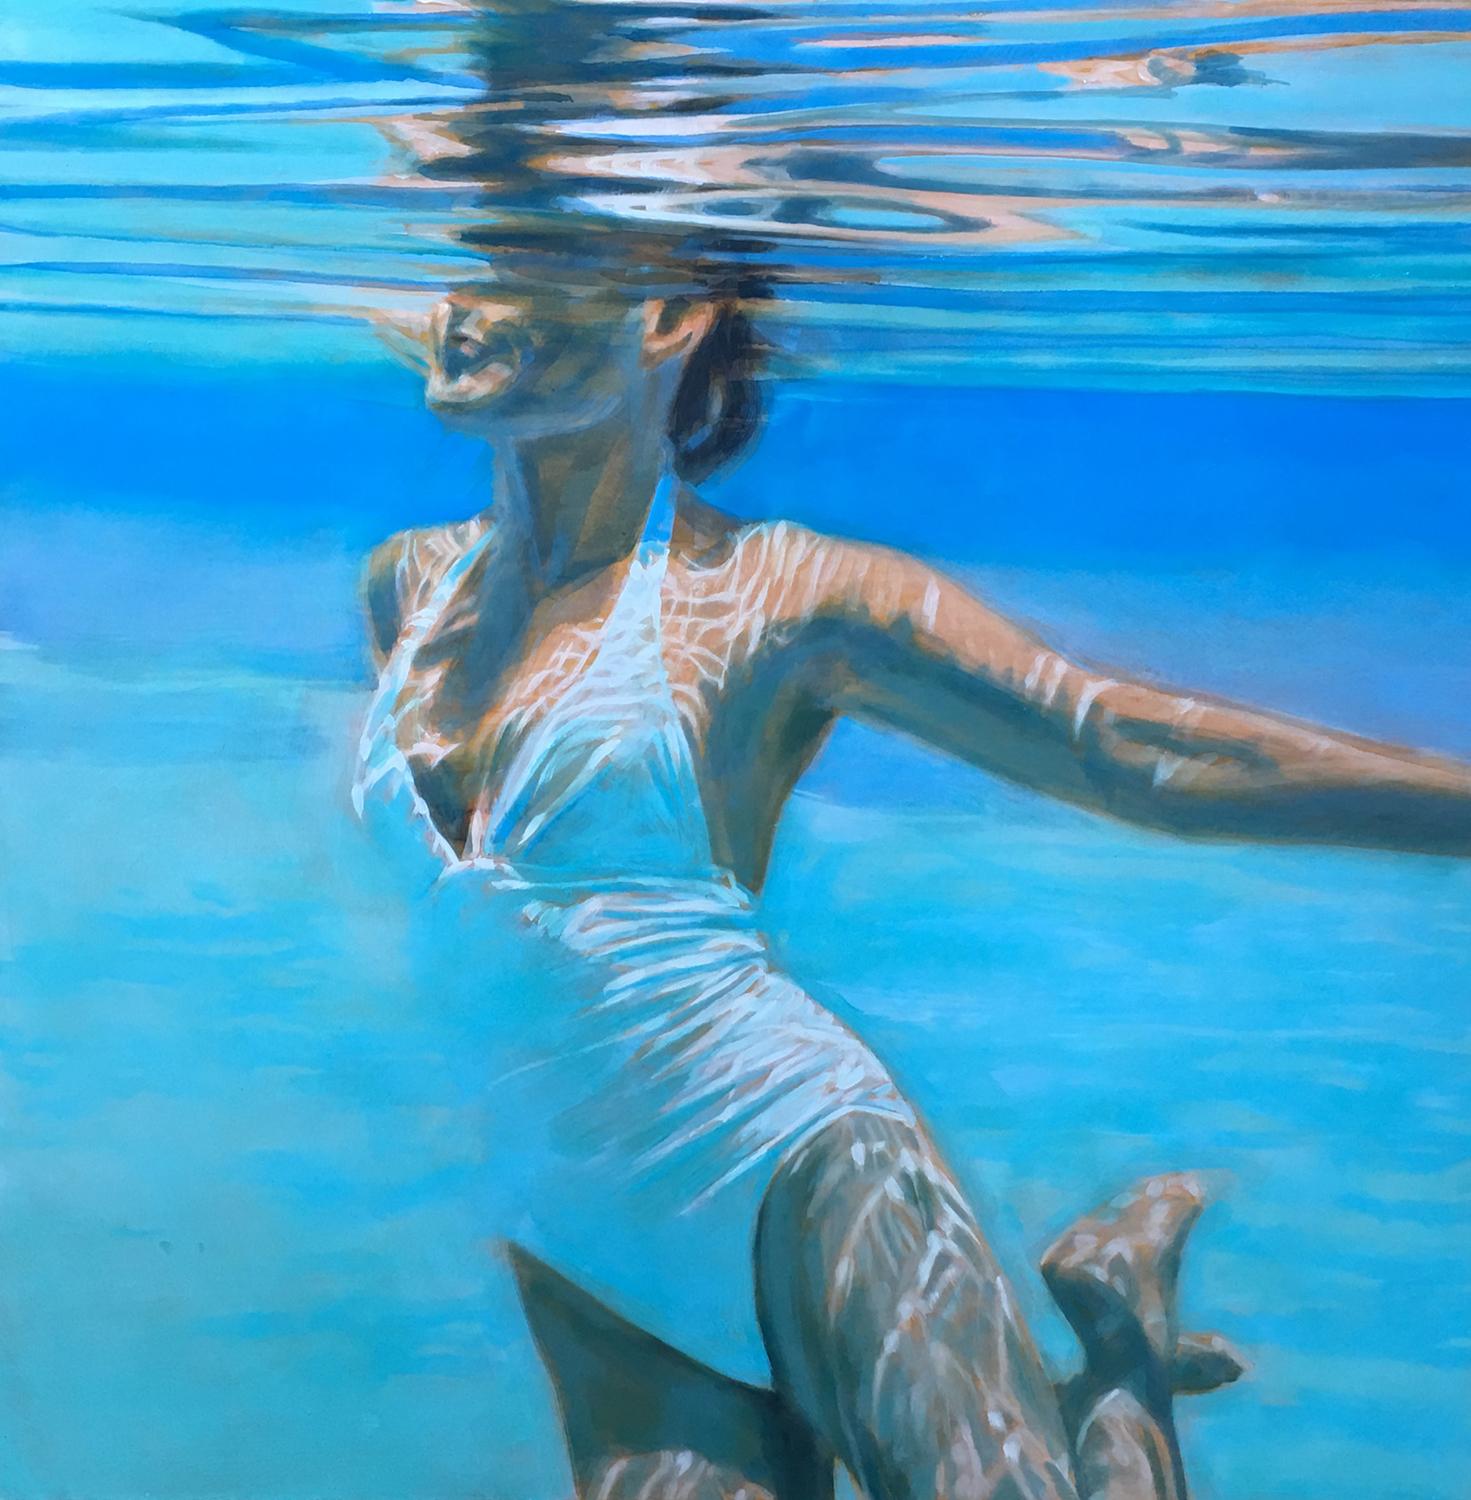 Carol Bennett Figurative Painting - Dissolve, Swimmer, Water, Painting, White, Blue, Female Figure, Beach